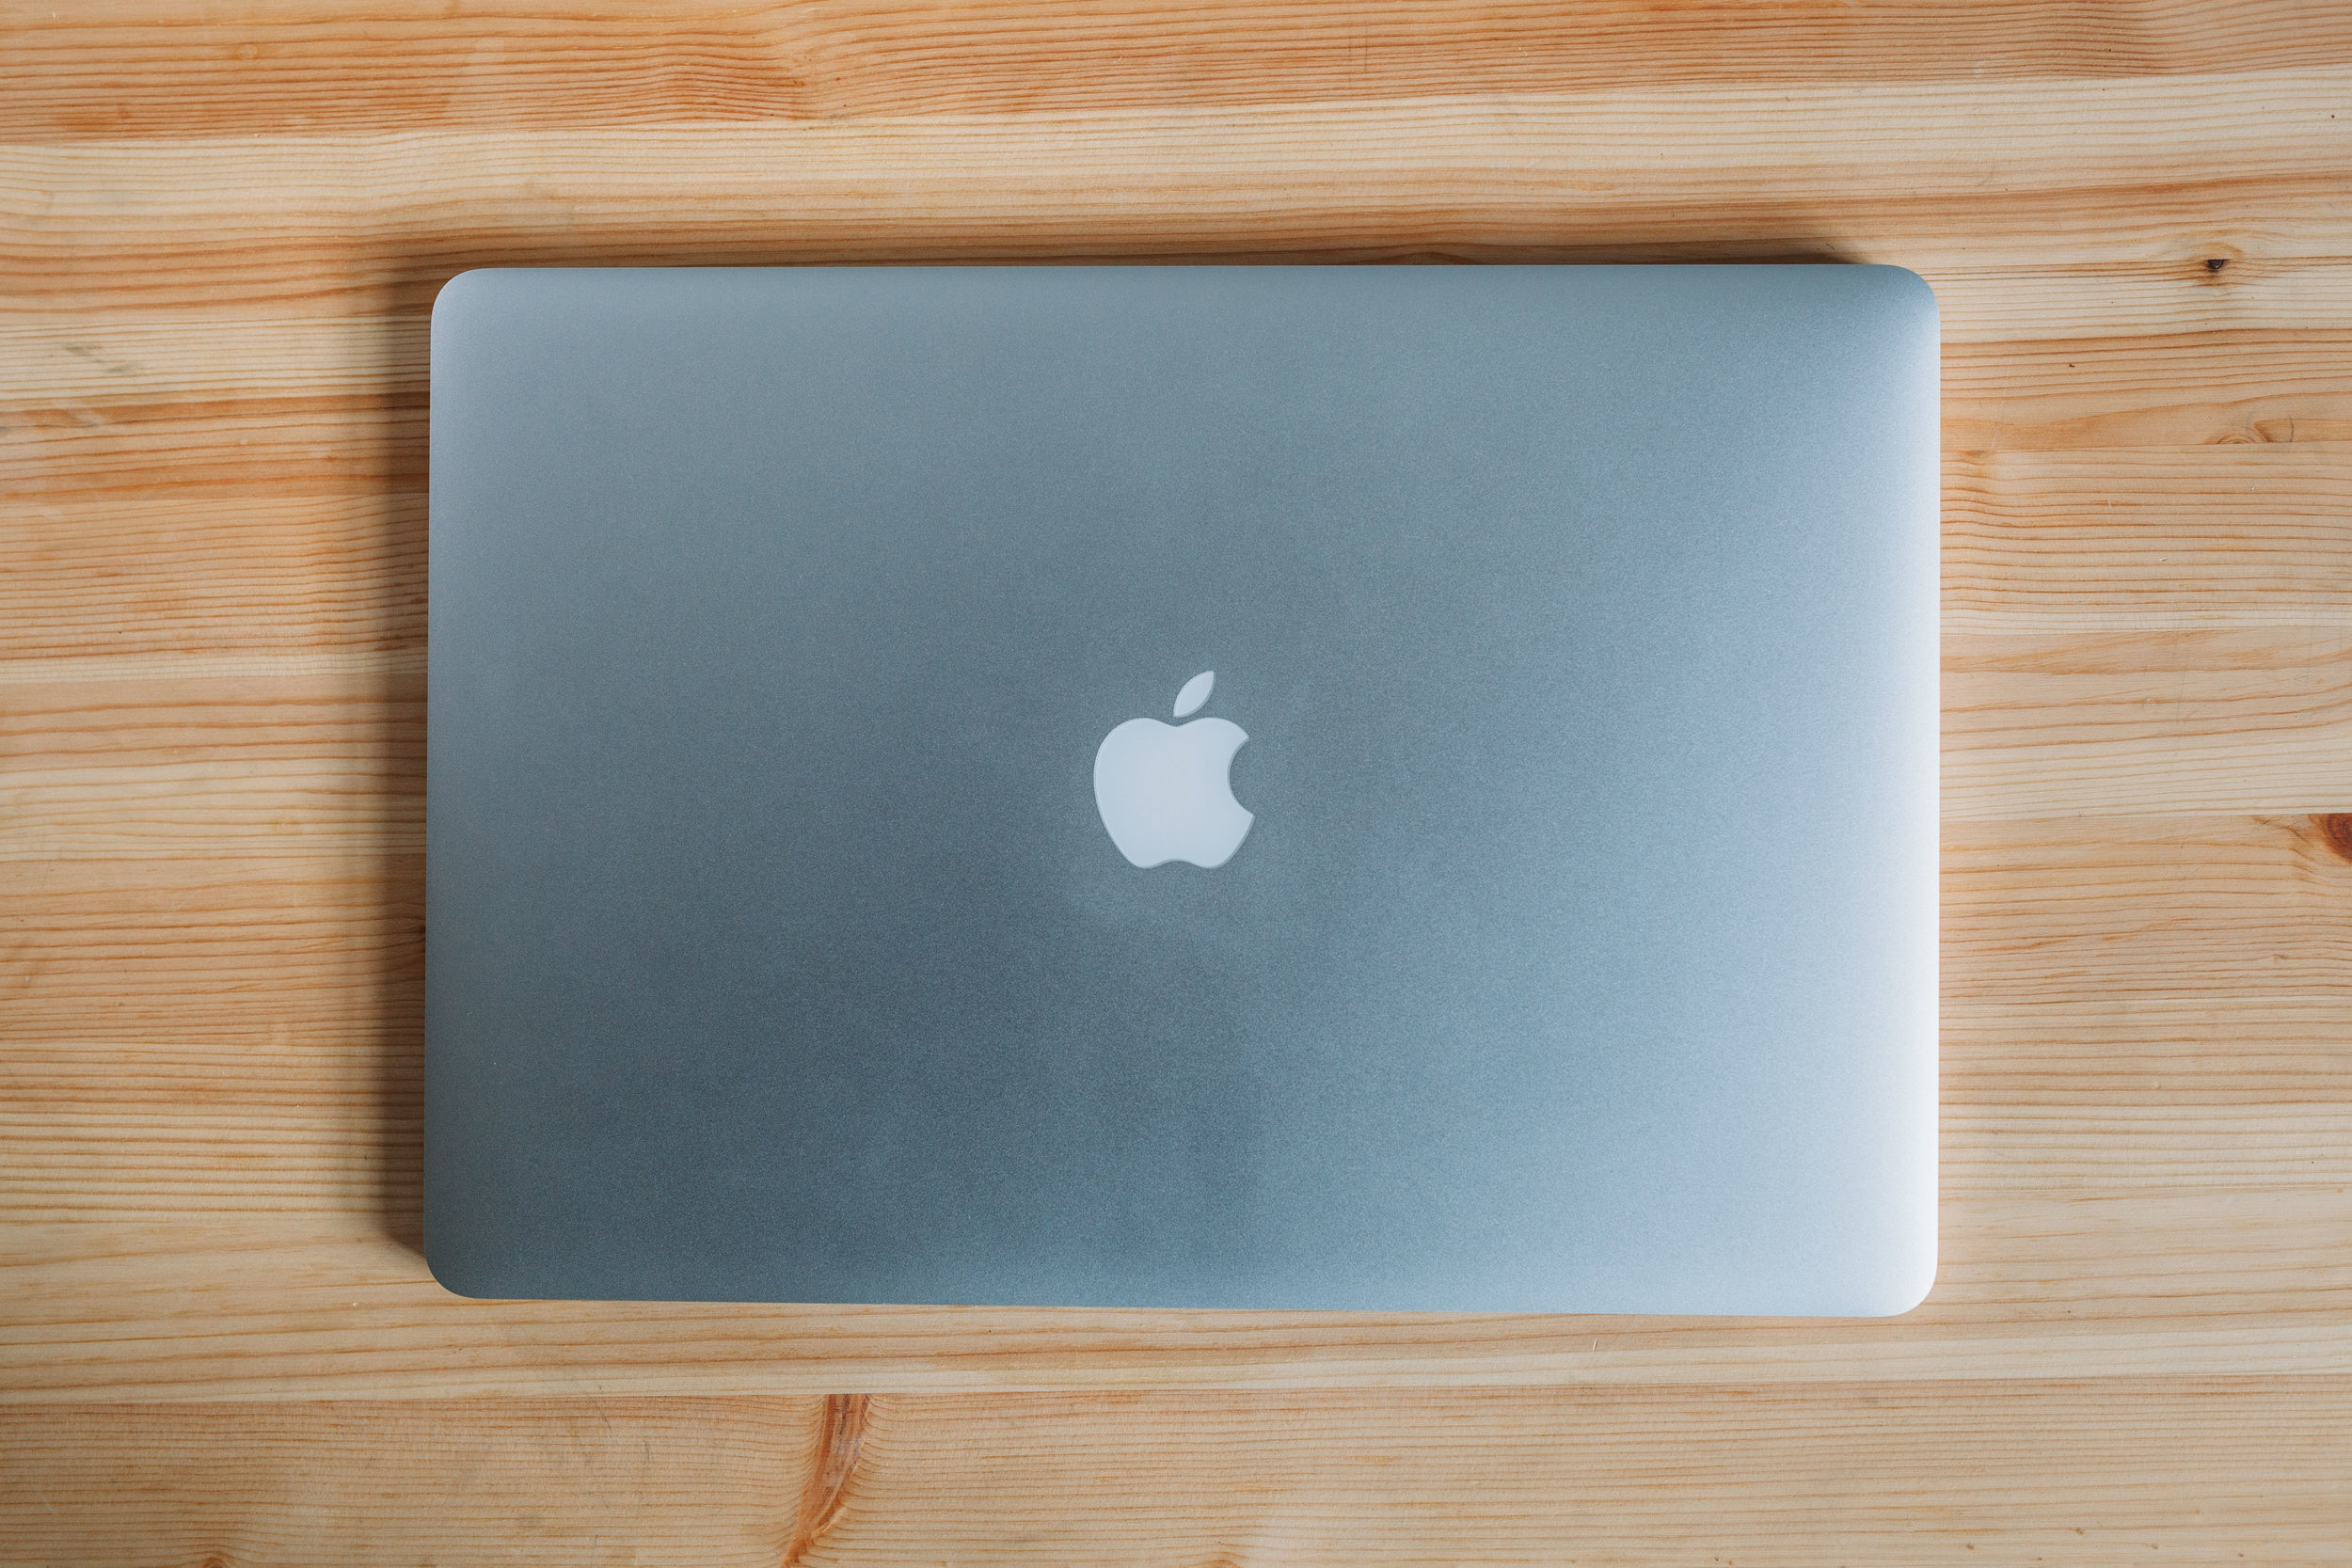 MacBook Pro (Retina, 15-inch, Early 2013) — One:One